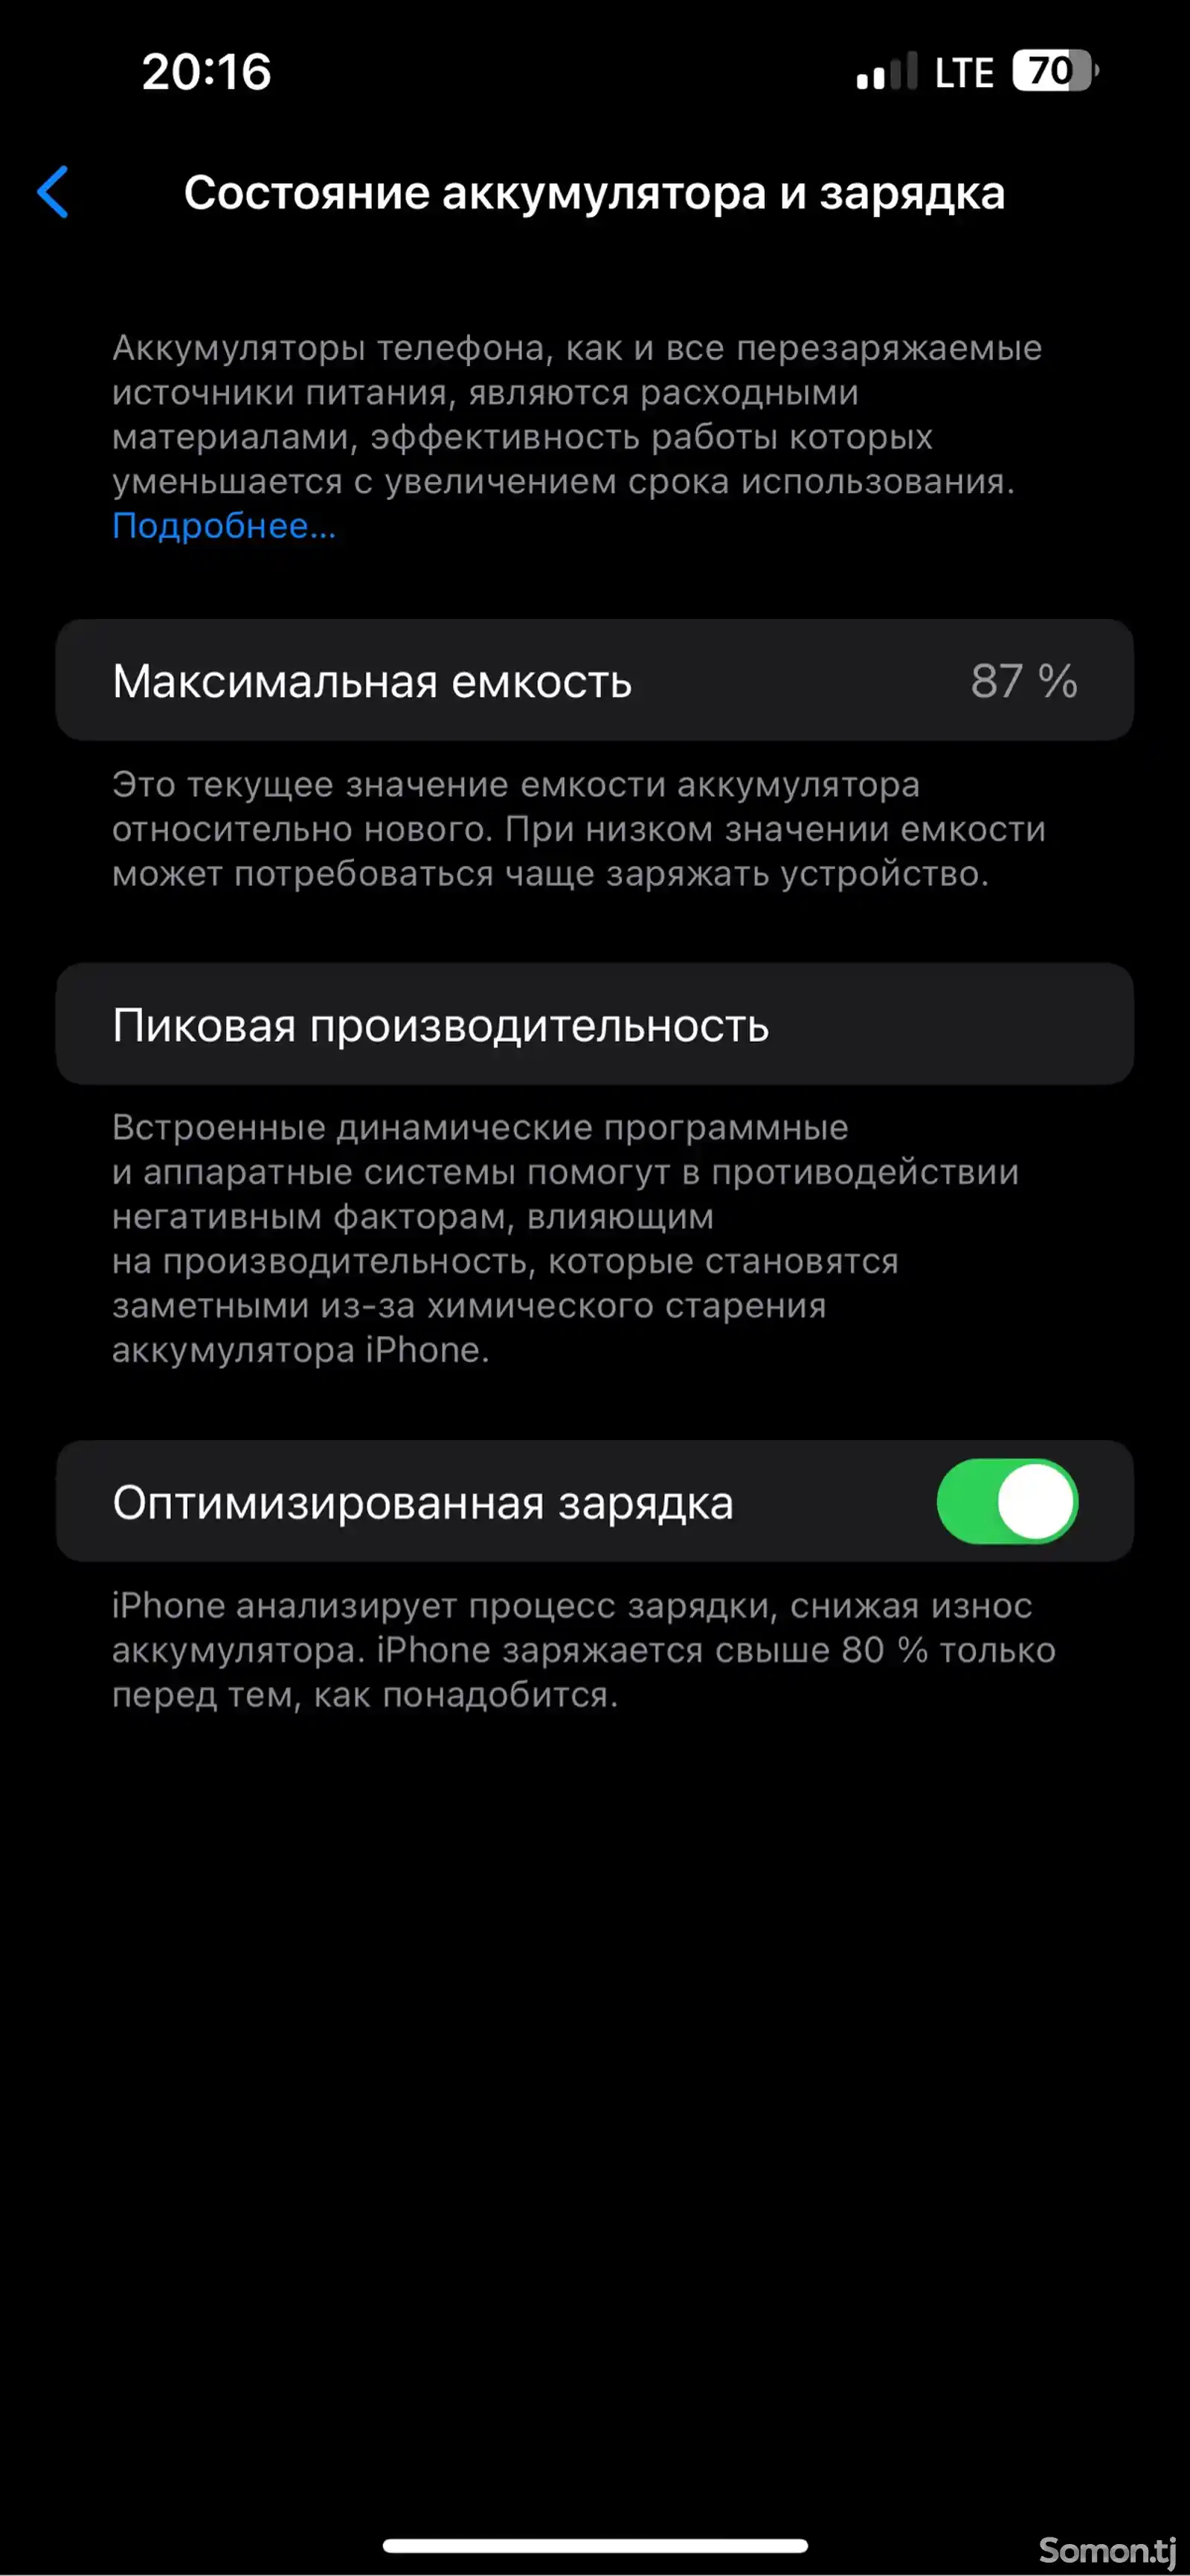 Apple iPhone 13 Pro Max, 256 gb, Alpine Green-1